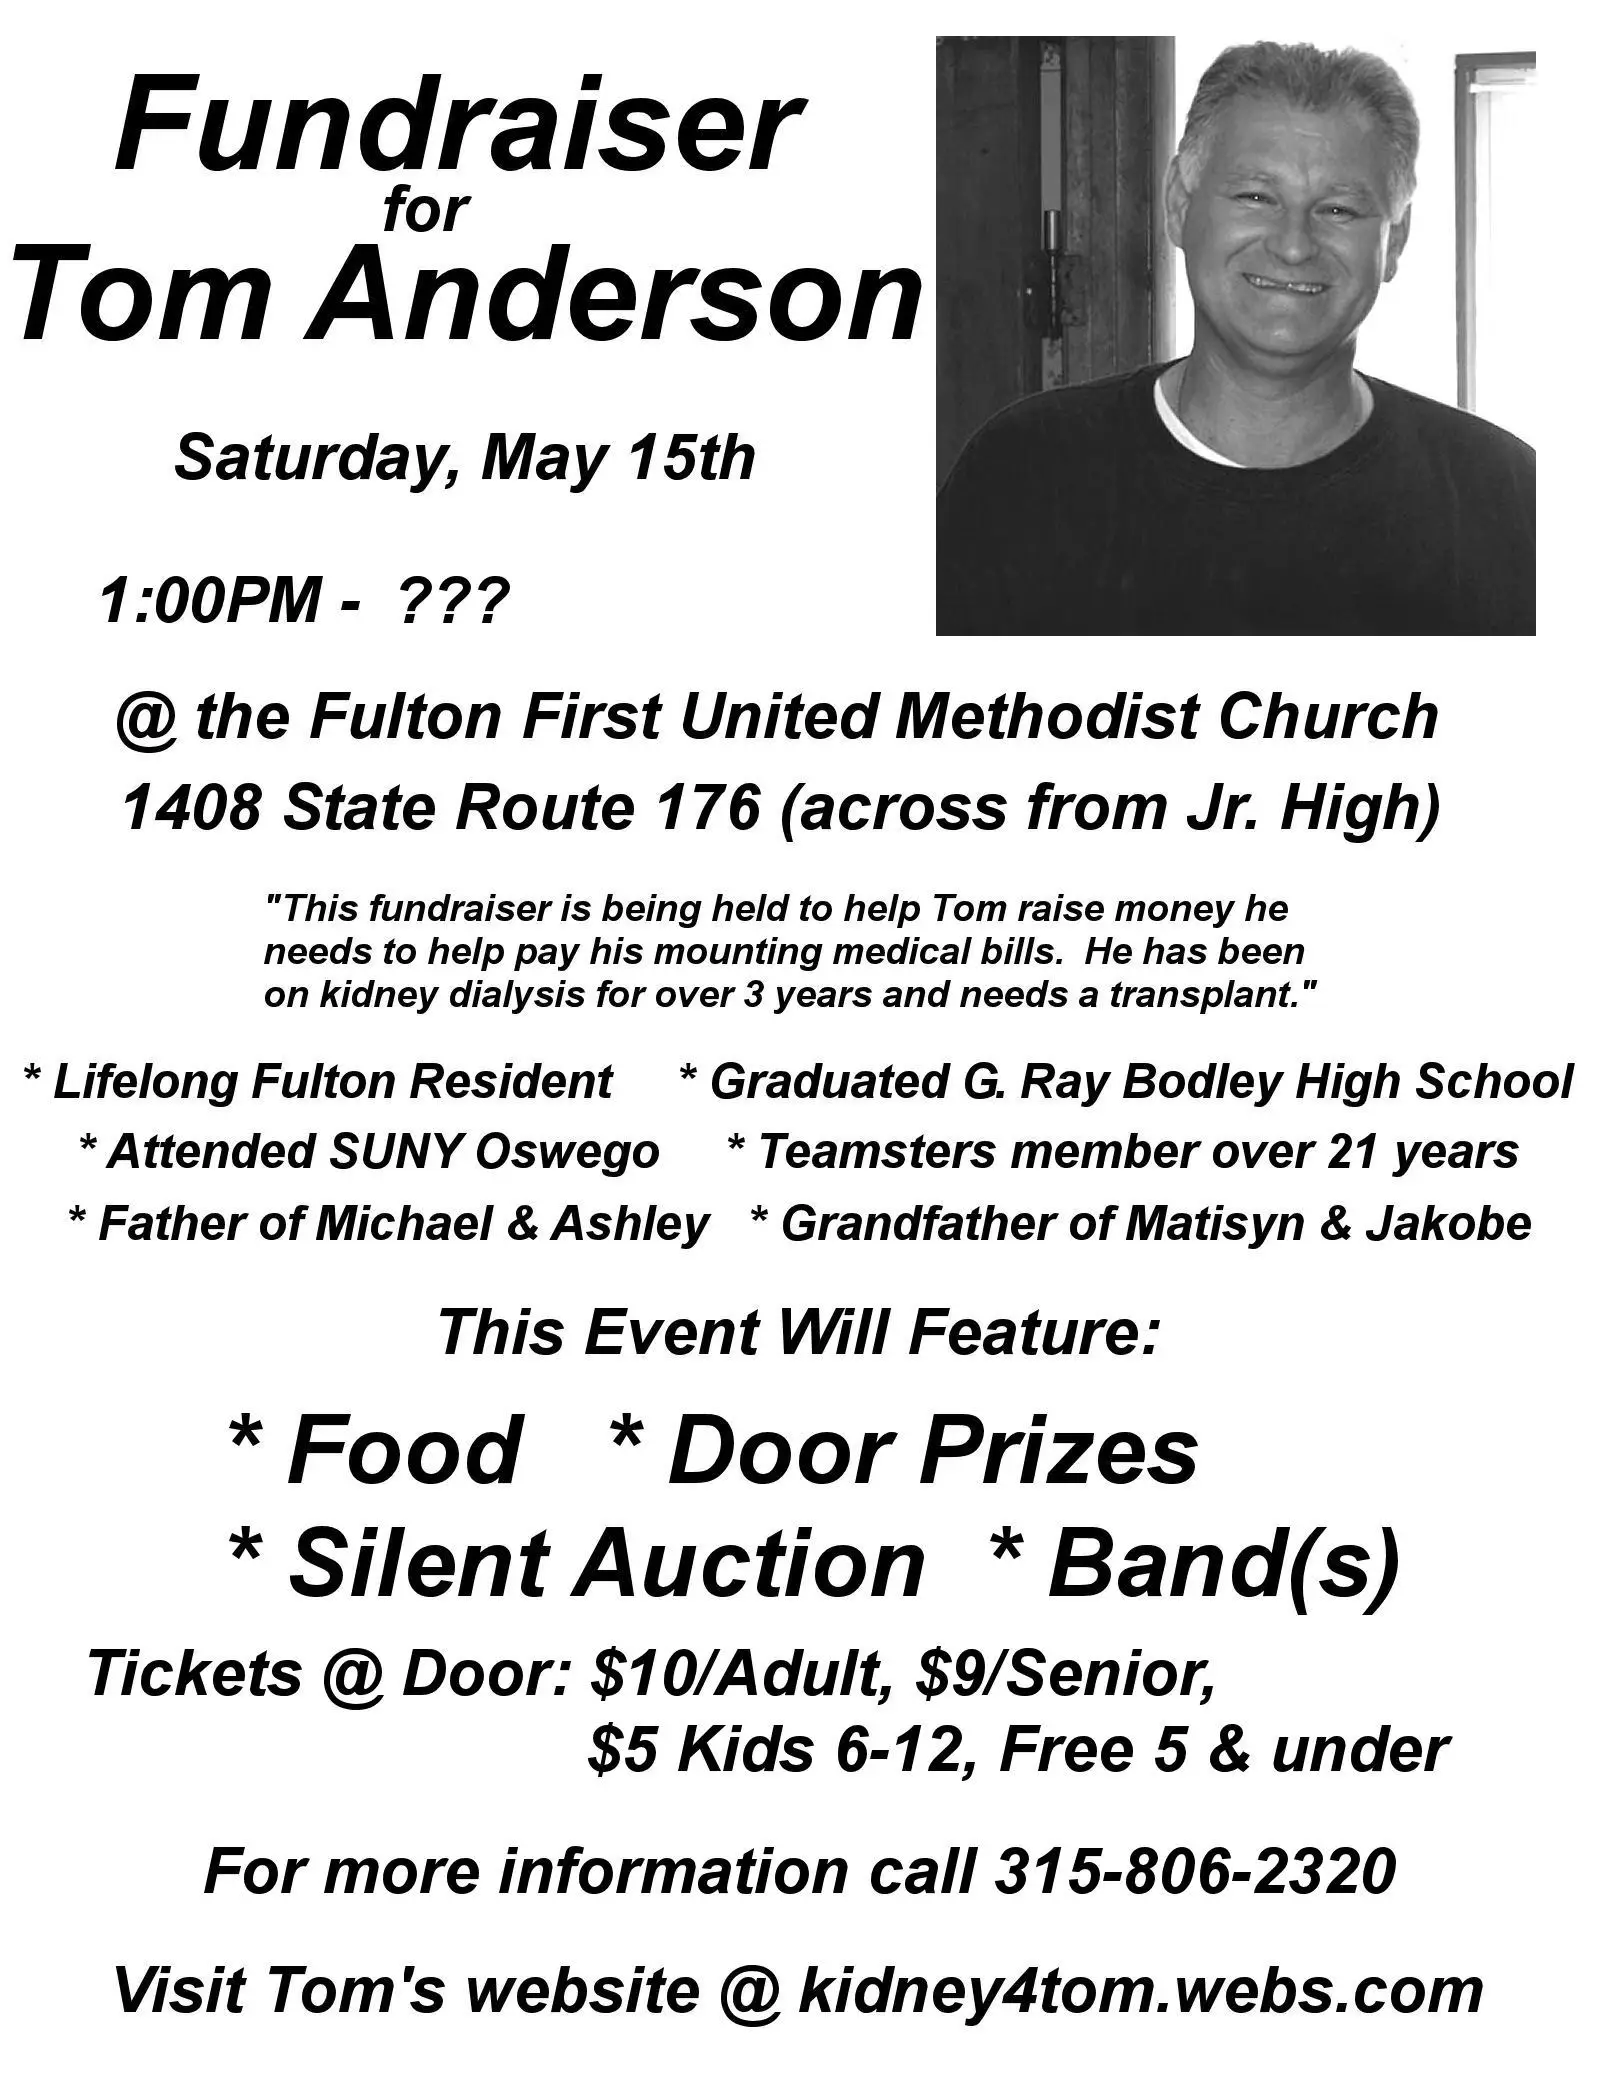 awareness-day-medical-expense-fundraiser-for-tom-anderson-oswego